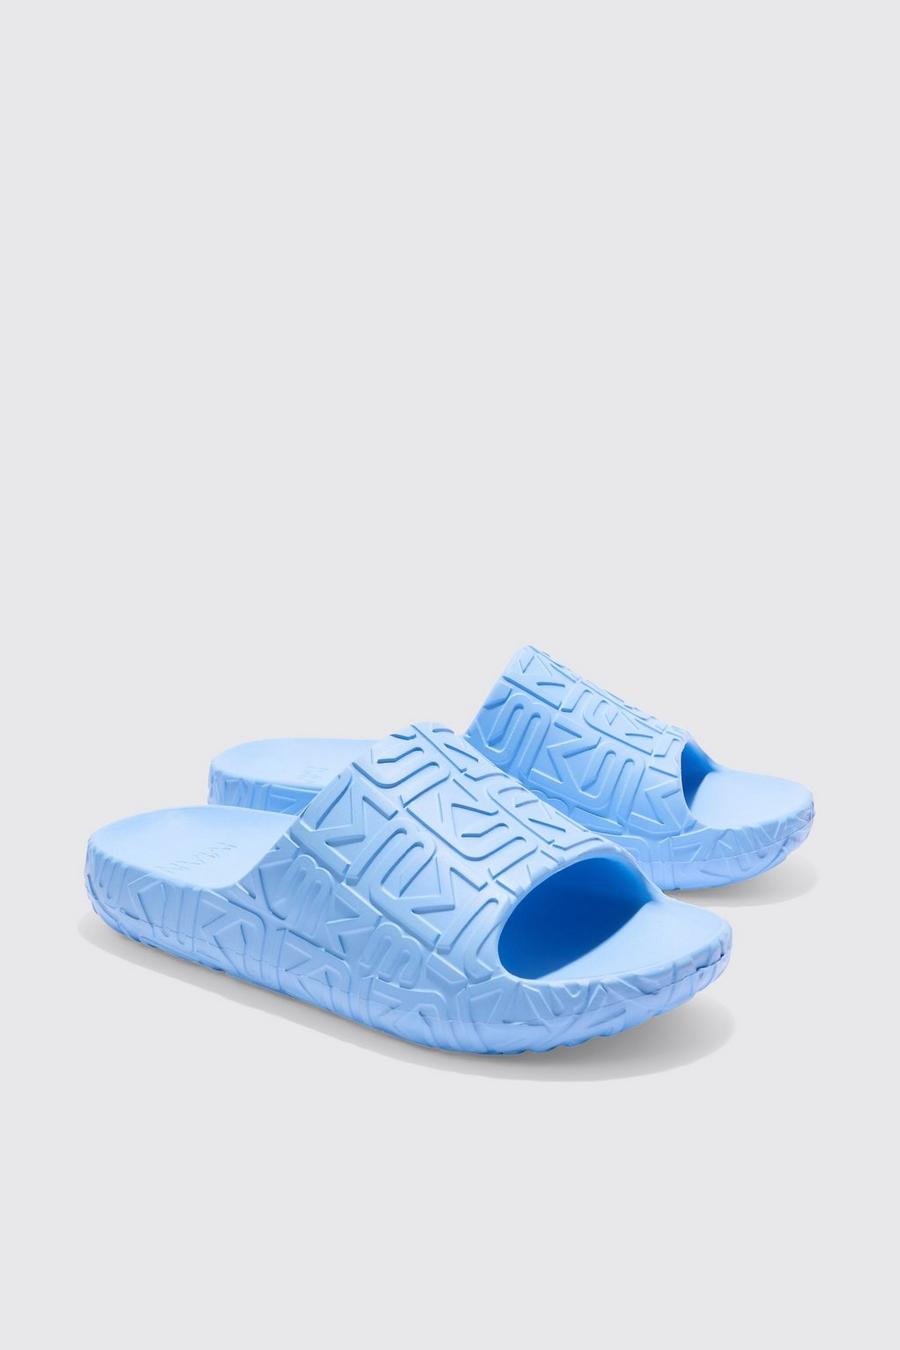 Light blue adidas primeknit shoes